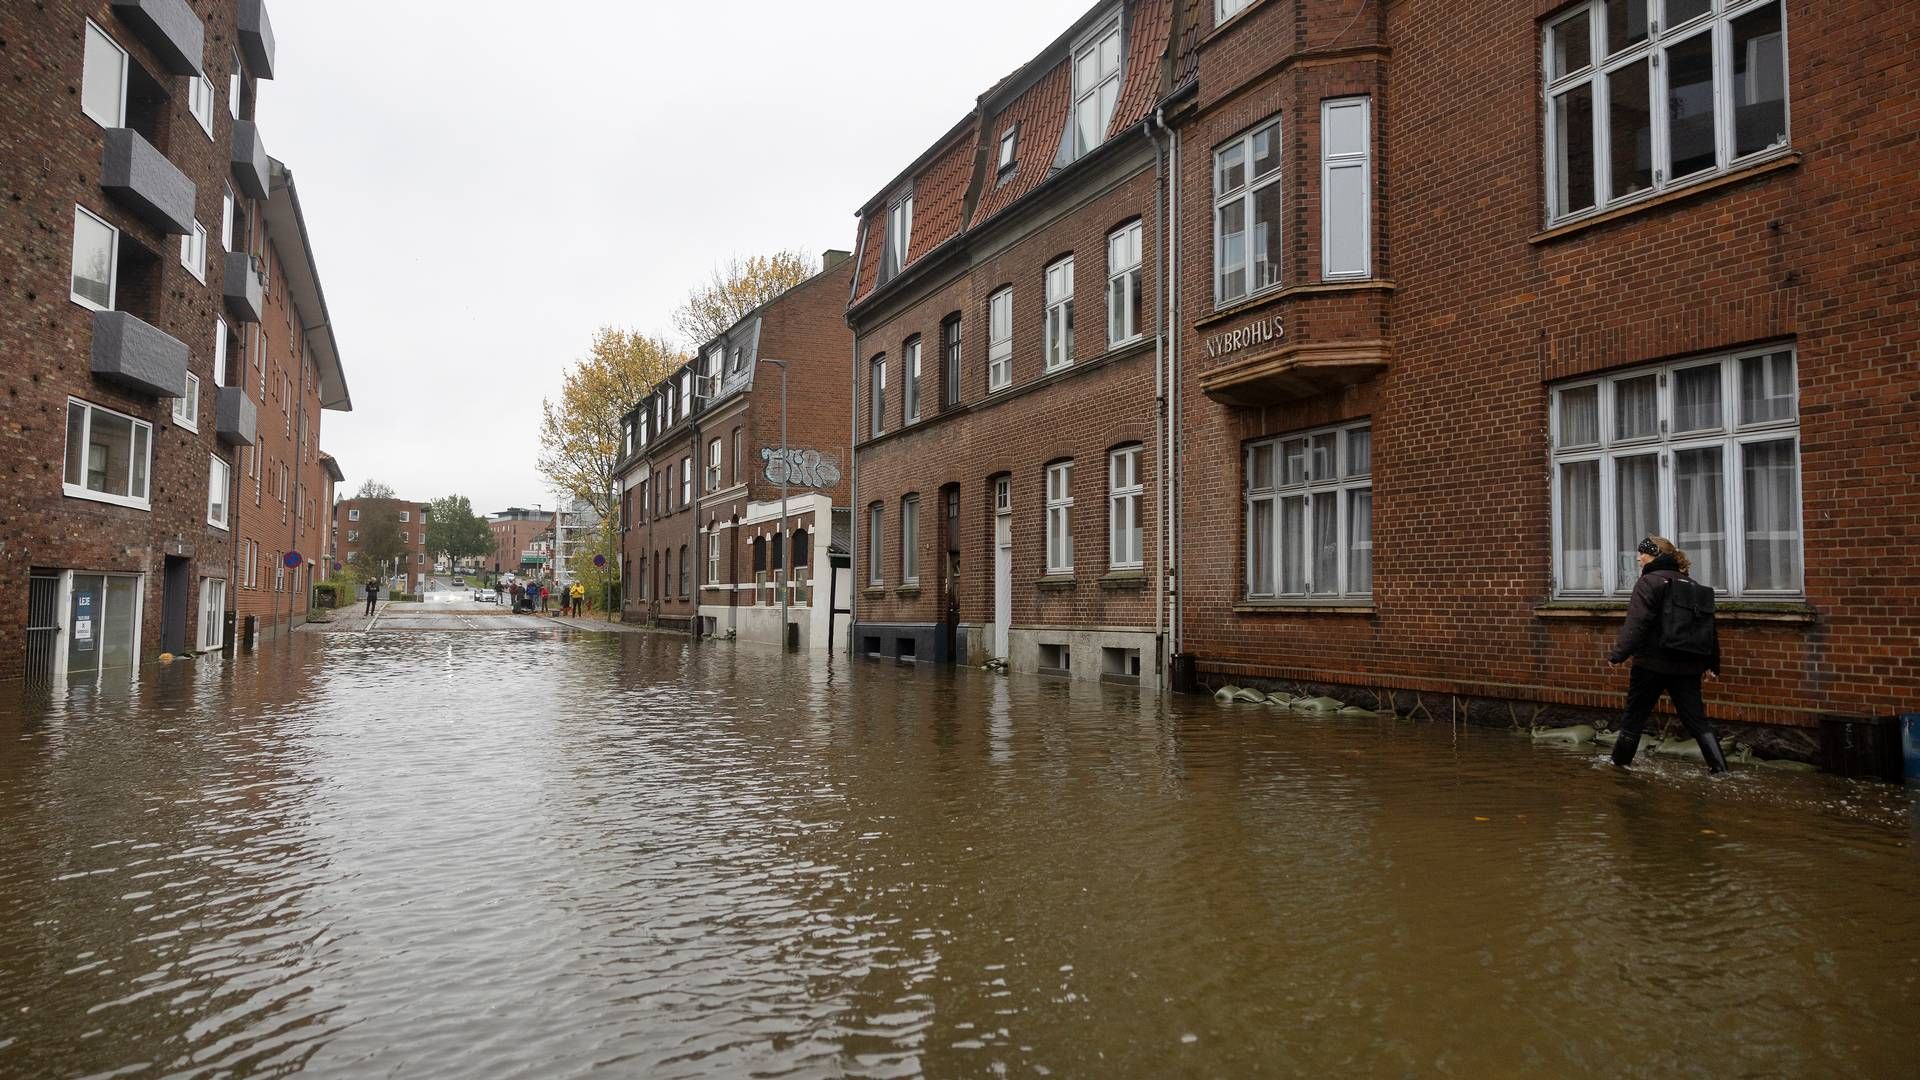 2023 slog den hidtidige nedbørsrekord. Her ses vandmasser i Kolding i oktober. | Foto: Thomas Borberg/Ritzau Scanpix